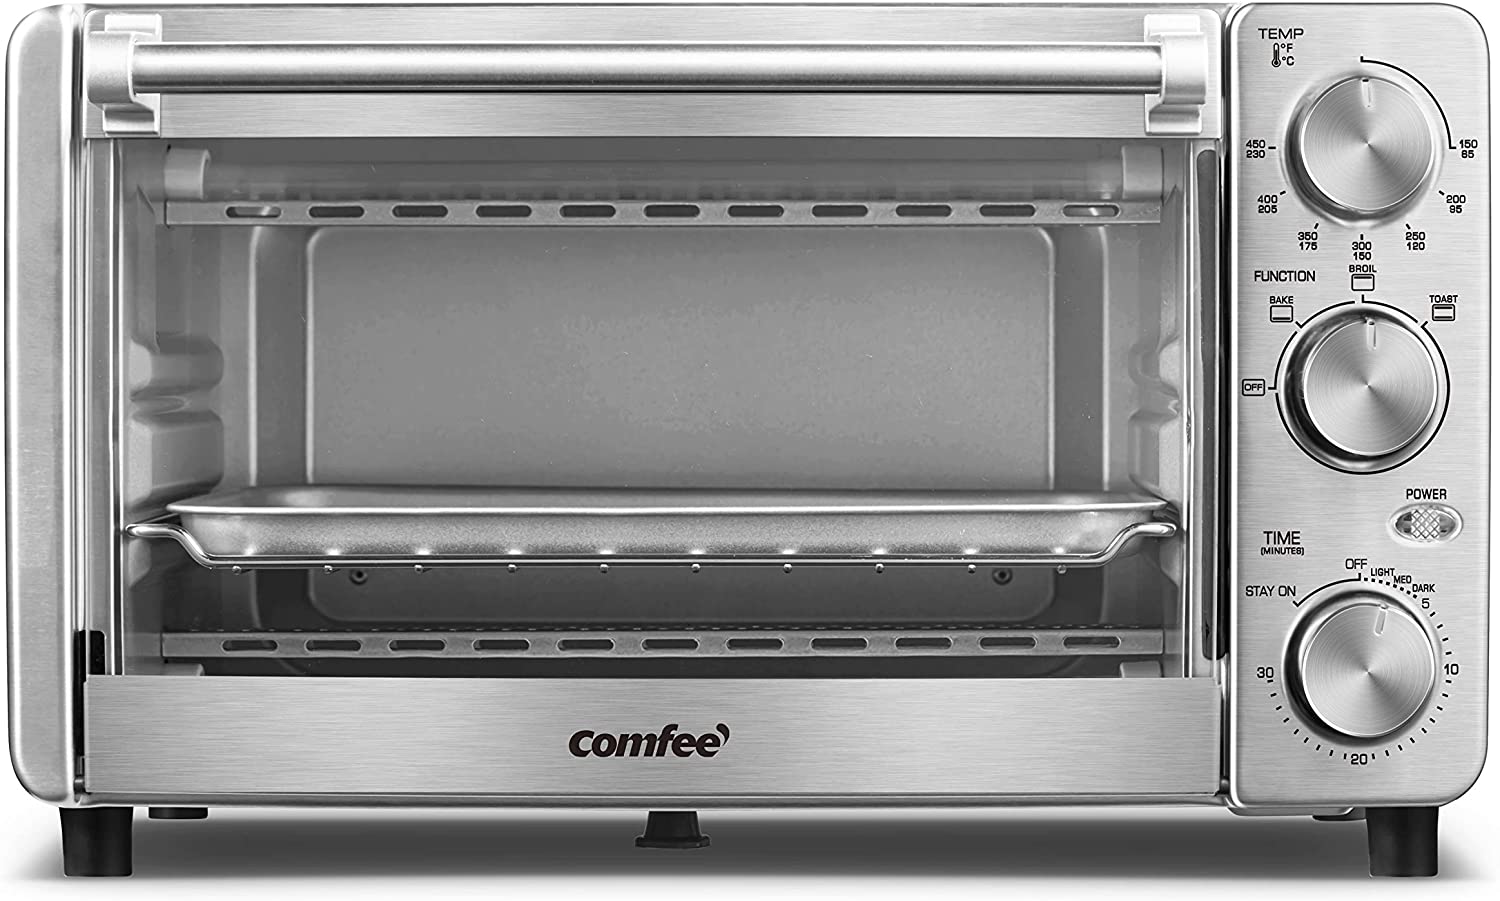 COMFEE' Toaster Oven, 4 Slice